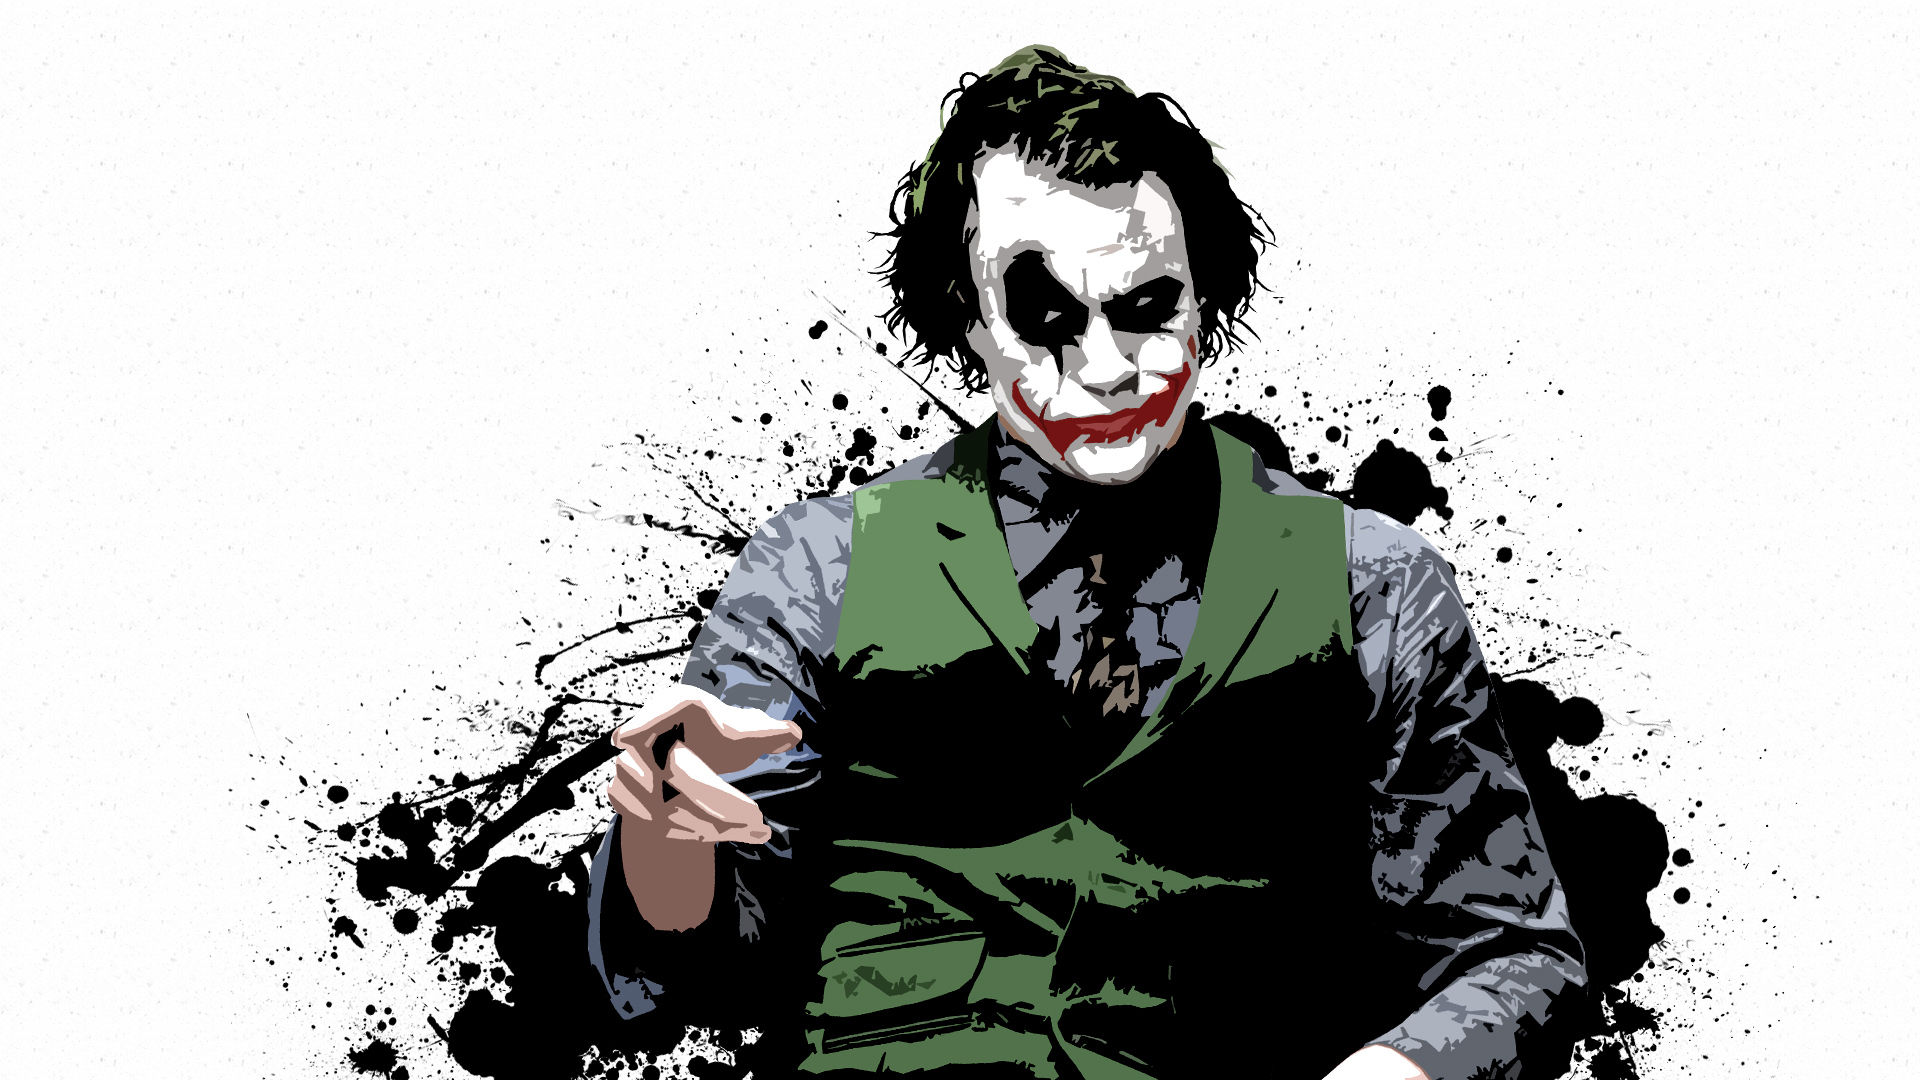 Imagenes De Alta Resolucion Sobre The Joker O El Guason Si Prefieren